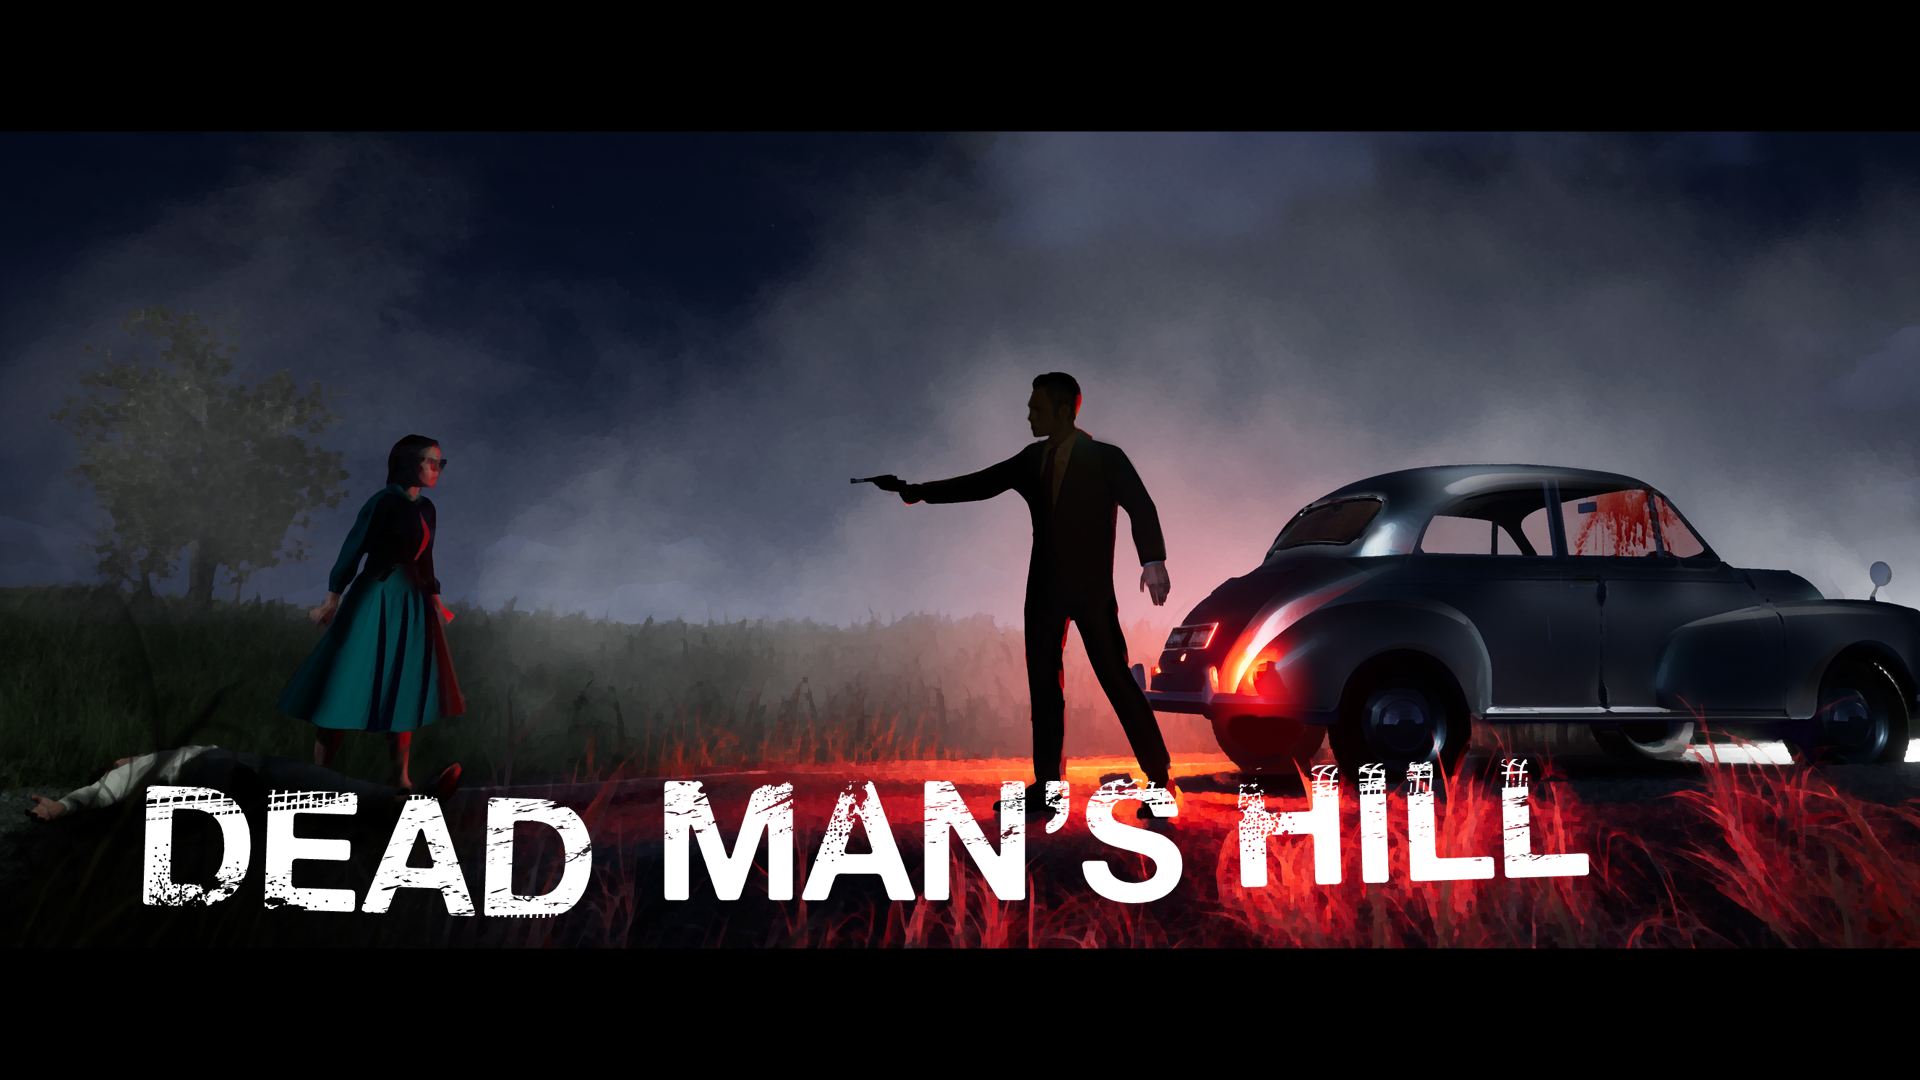 DEAD MAN'S HILL